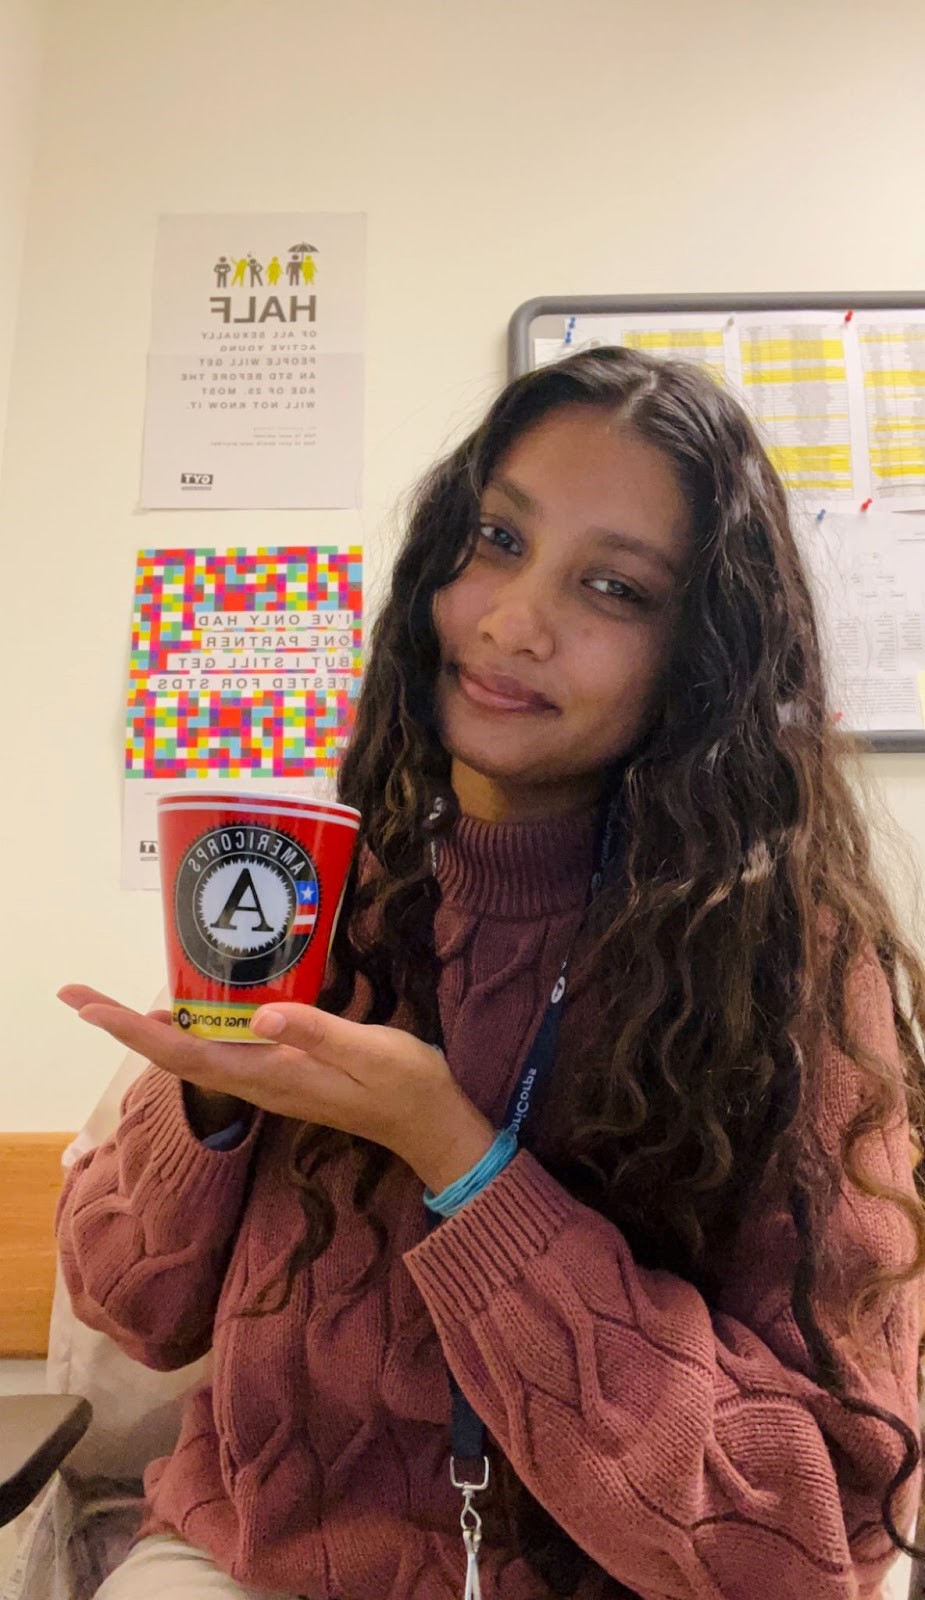 A photo of Aneesha holding a mug with the AmeriCorps logo on it